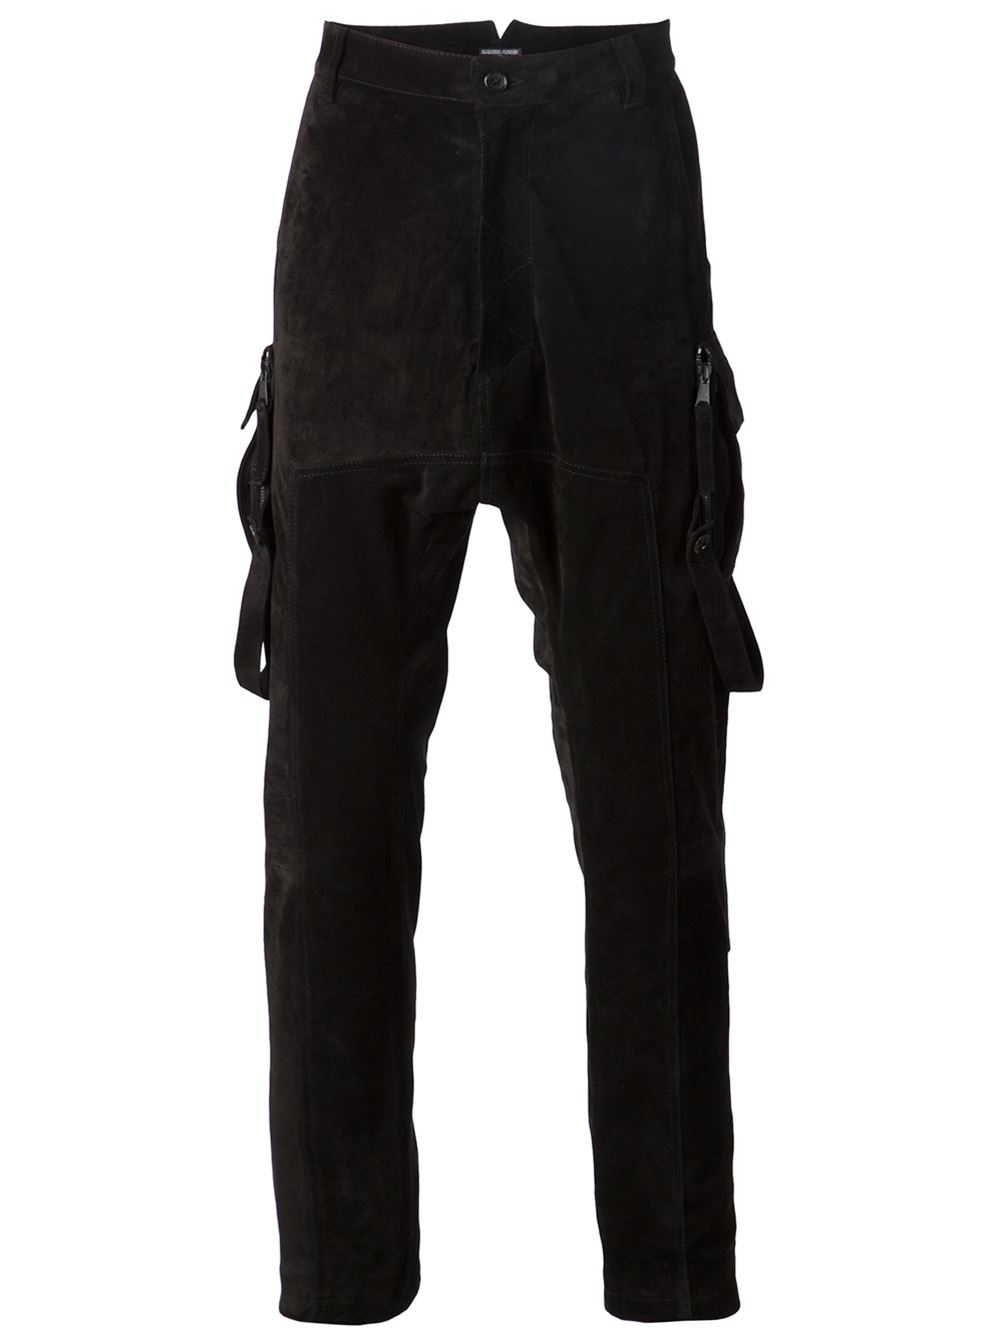 Black Cargo Pants with Straps - Darkwear Pants - X